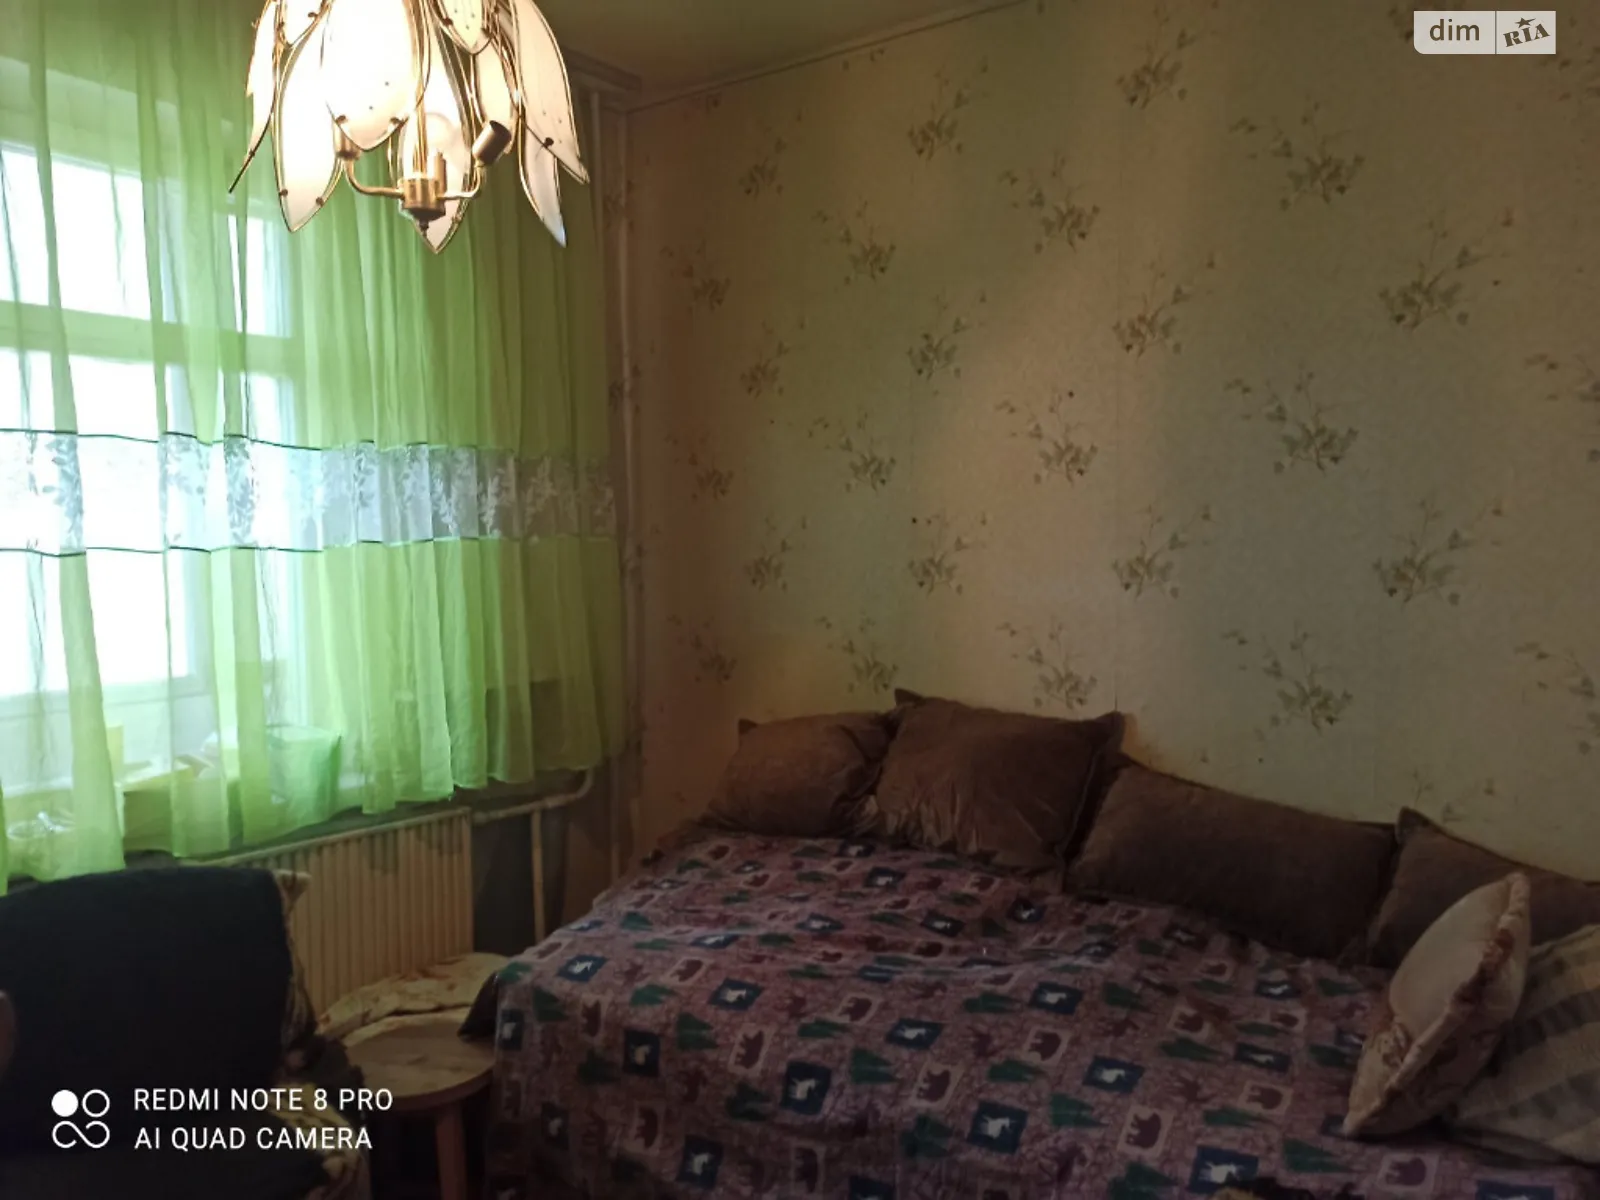 Сдается в аренду комната 70 кв. м в Киеве, цена: 3500 грн - фото 1